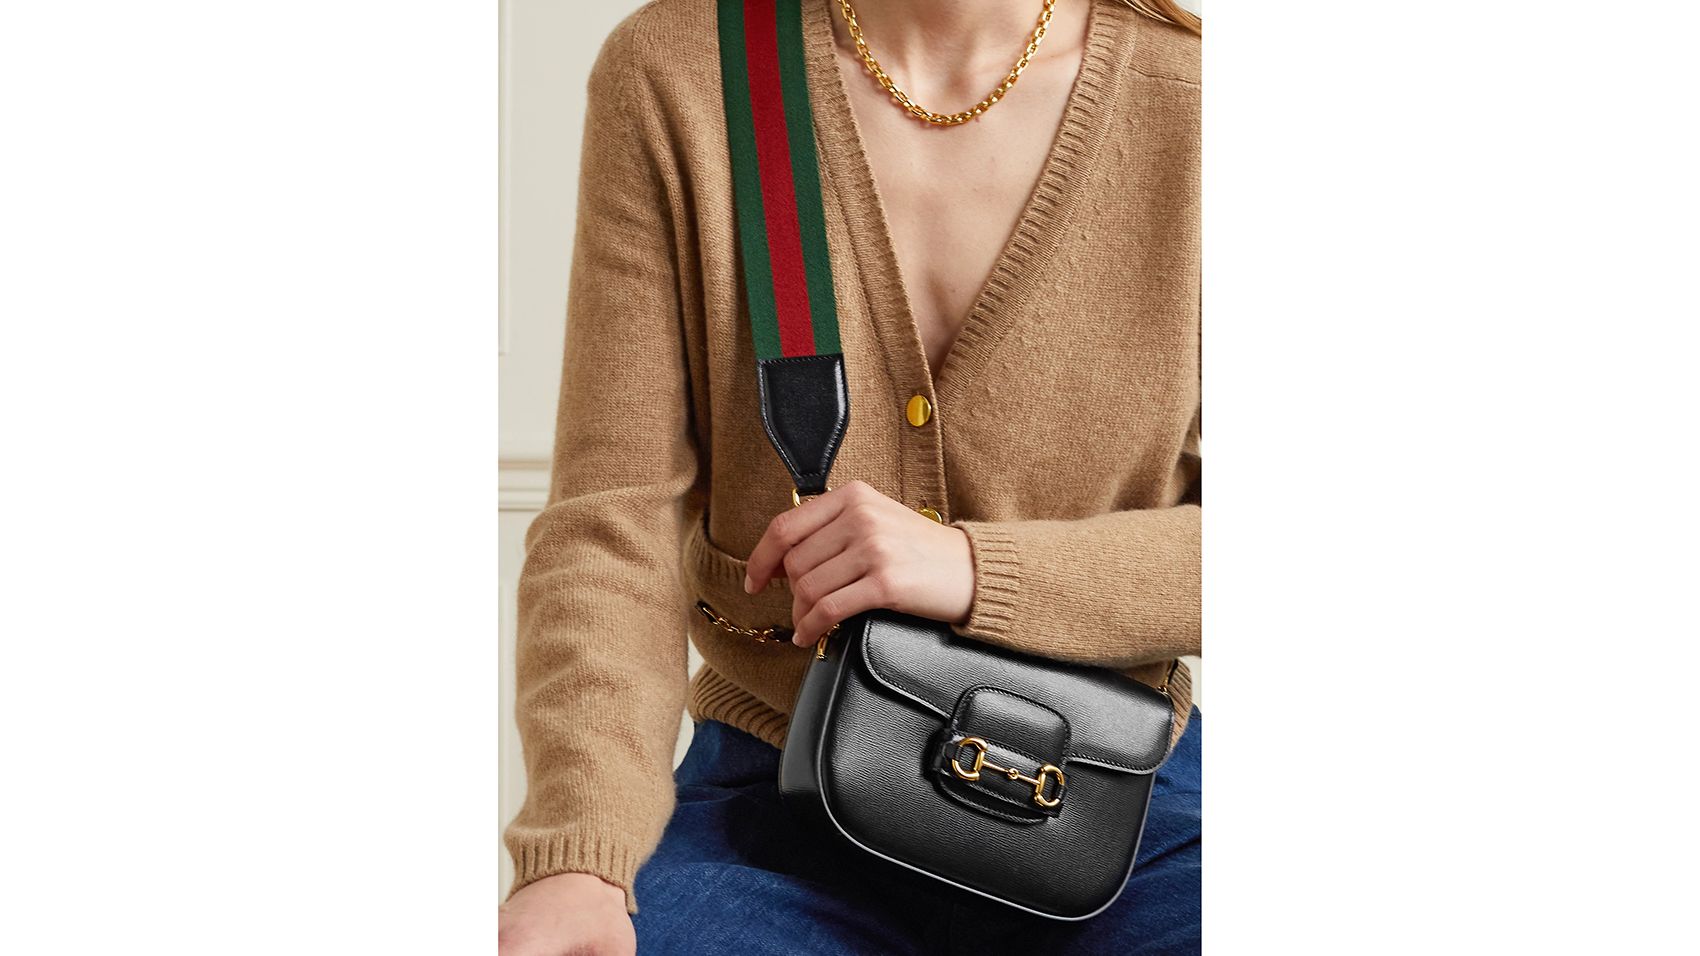 Black 1955 Horsebit mini grained-leather shoulder bag, Gucci